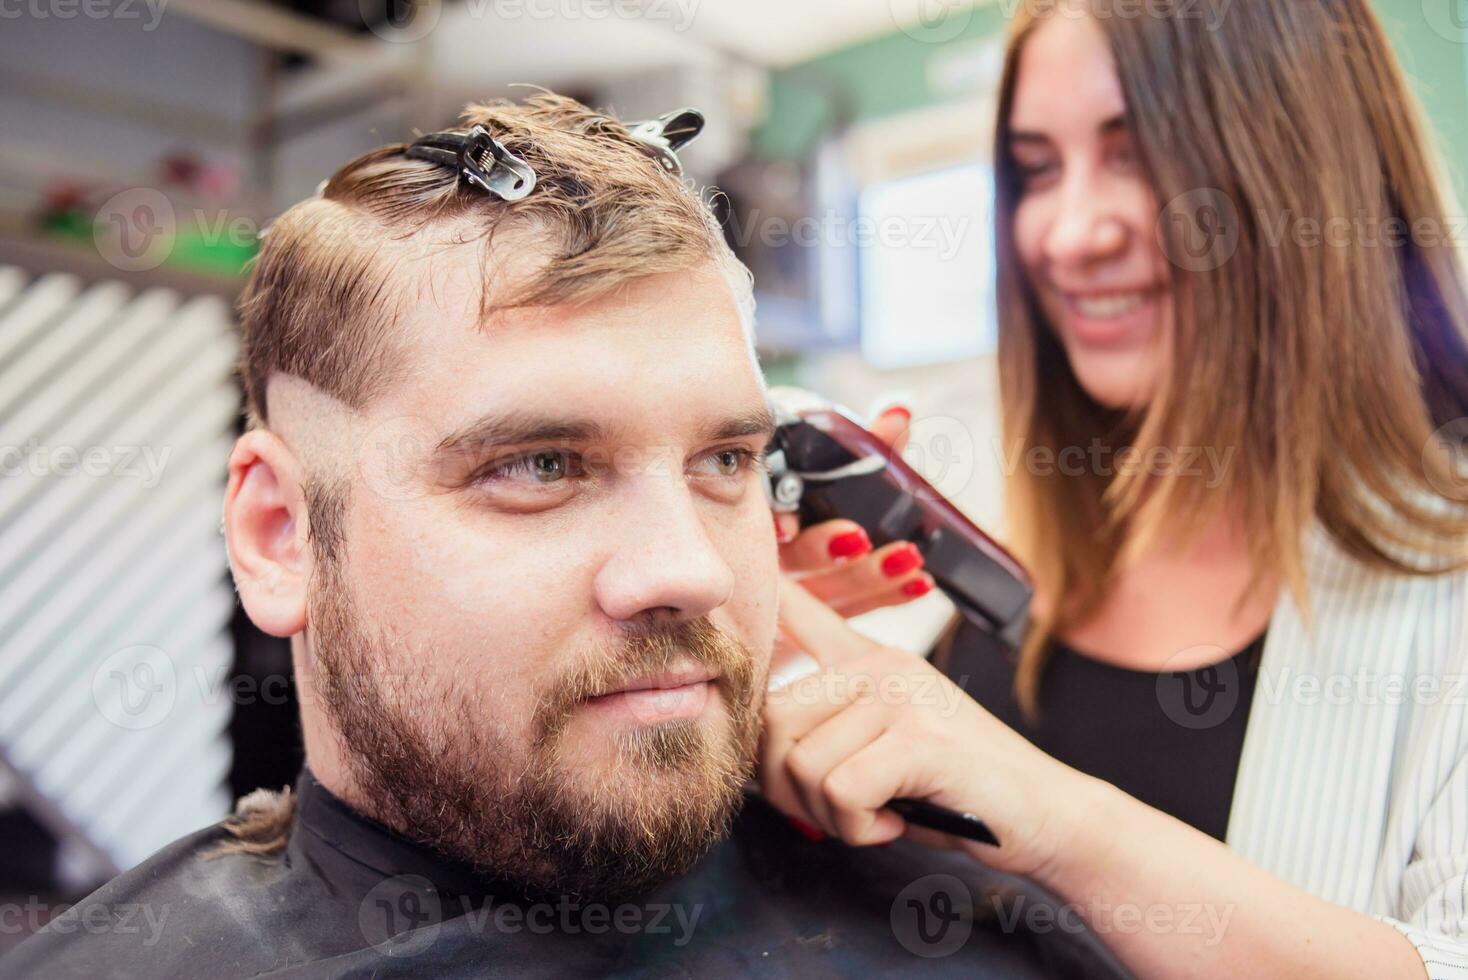 Hairdresser woman cutting a man's hair in a barbershop photo